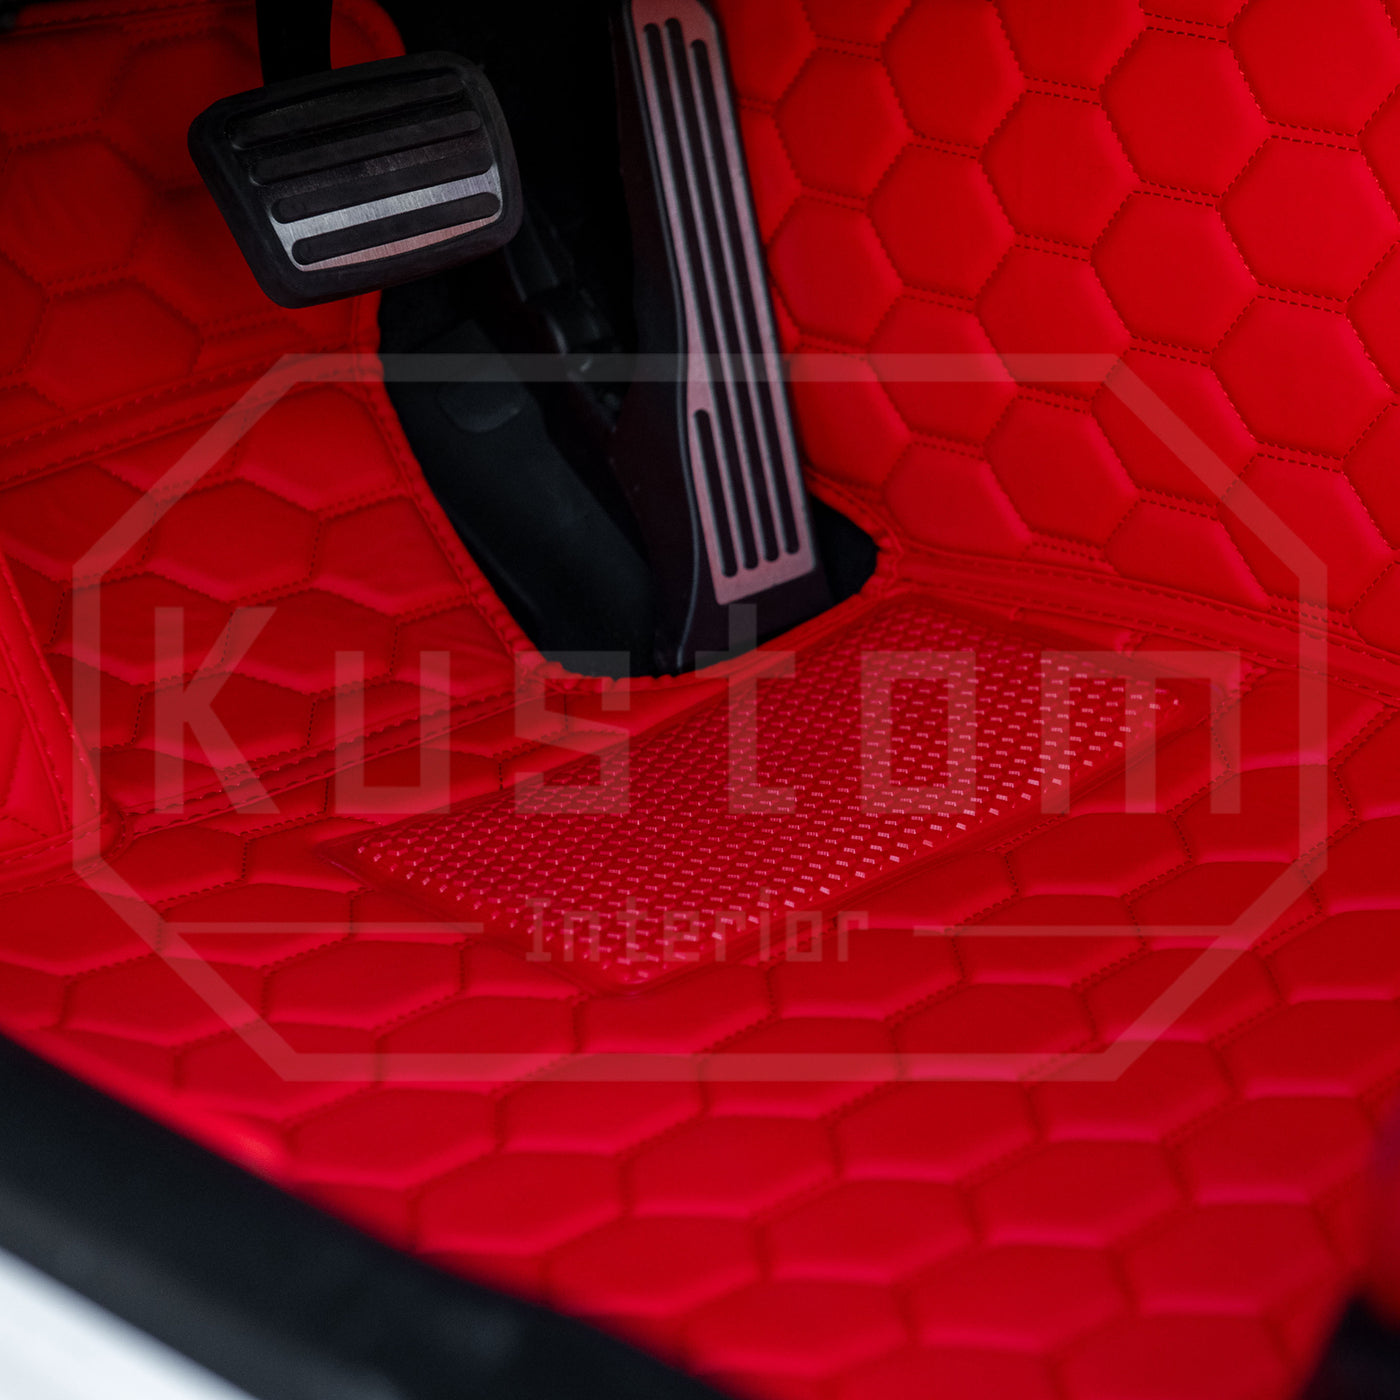 Corvette C8 Custom Honeycomb Leather Floor Mat Liners